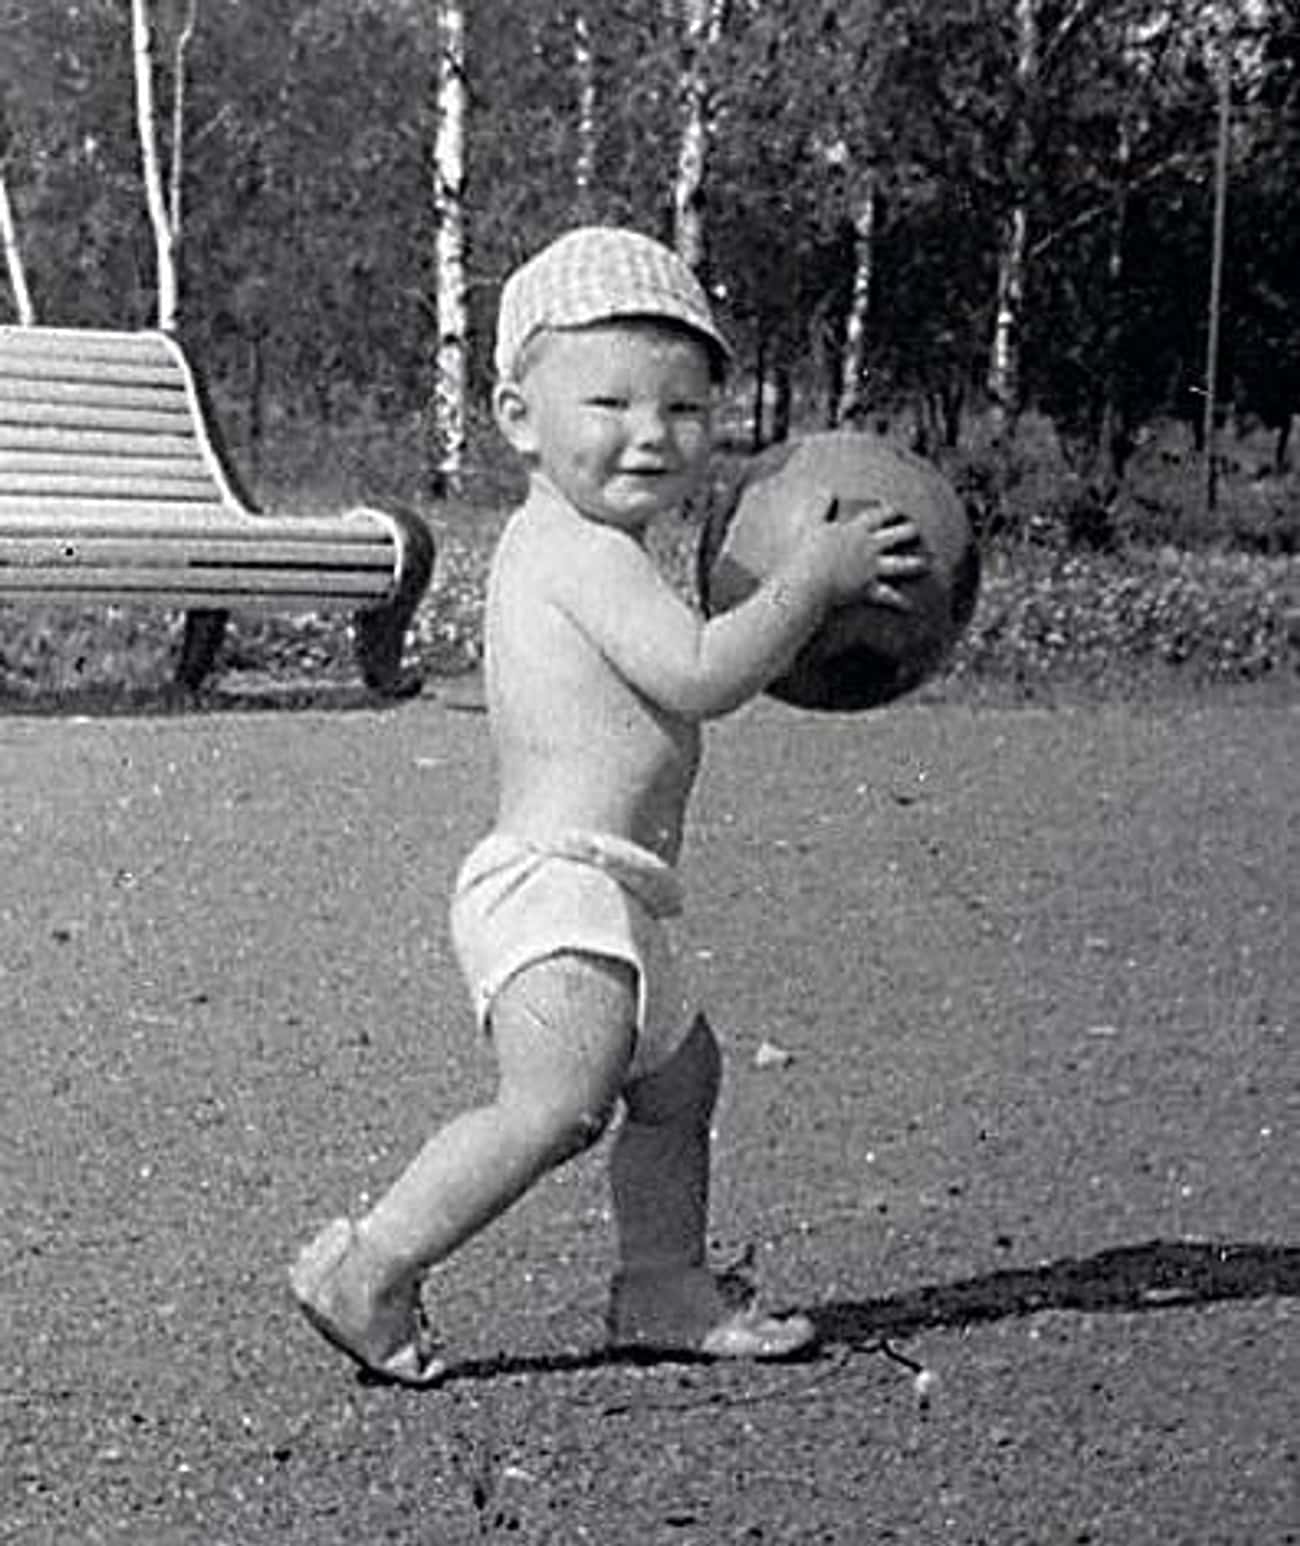 Young Jim Carrey in Diaper and Cap as a Toddler